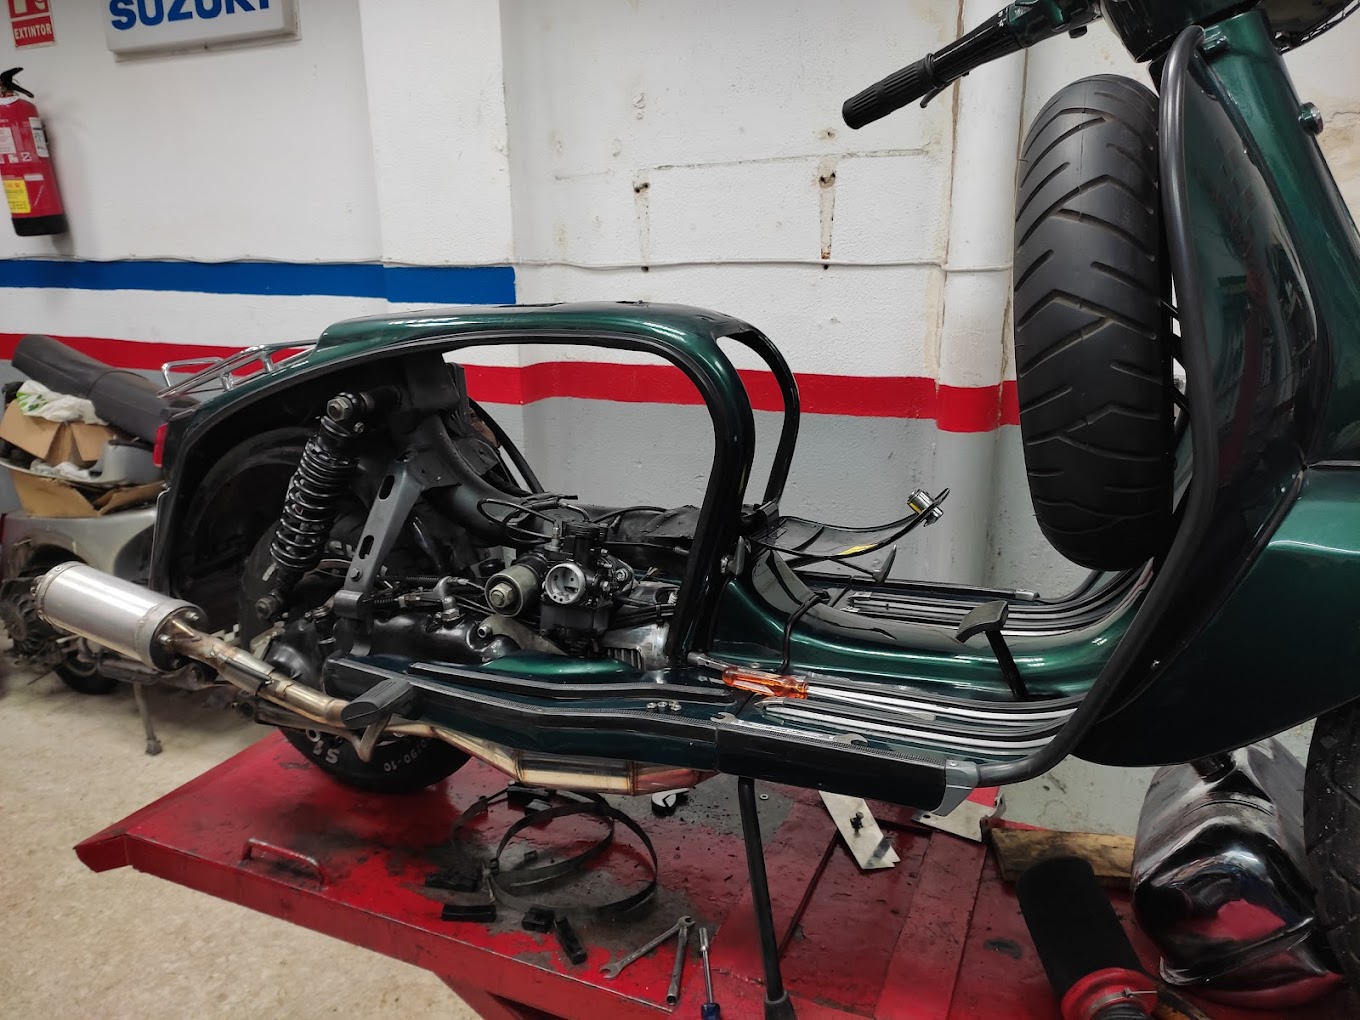 moto en un taller mecanico